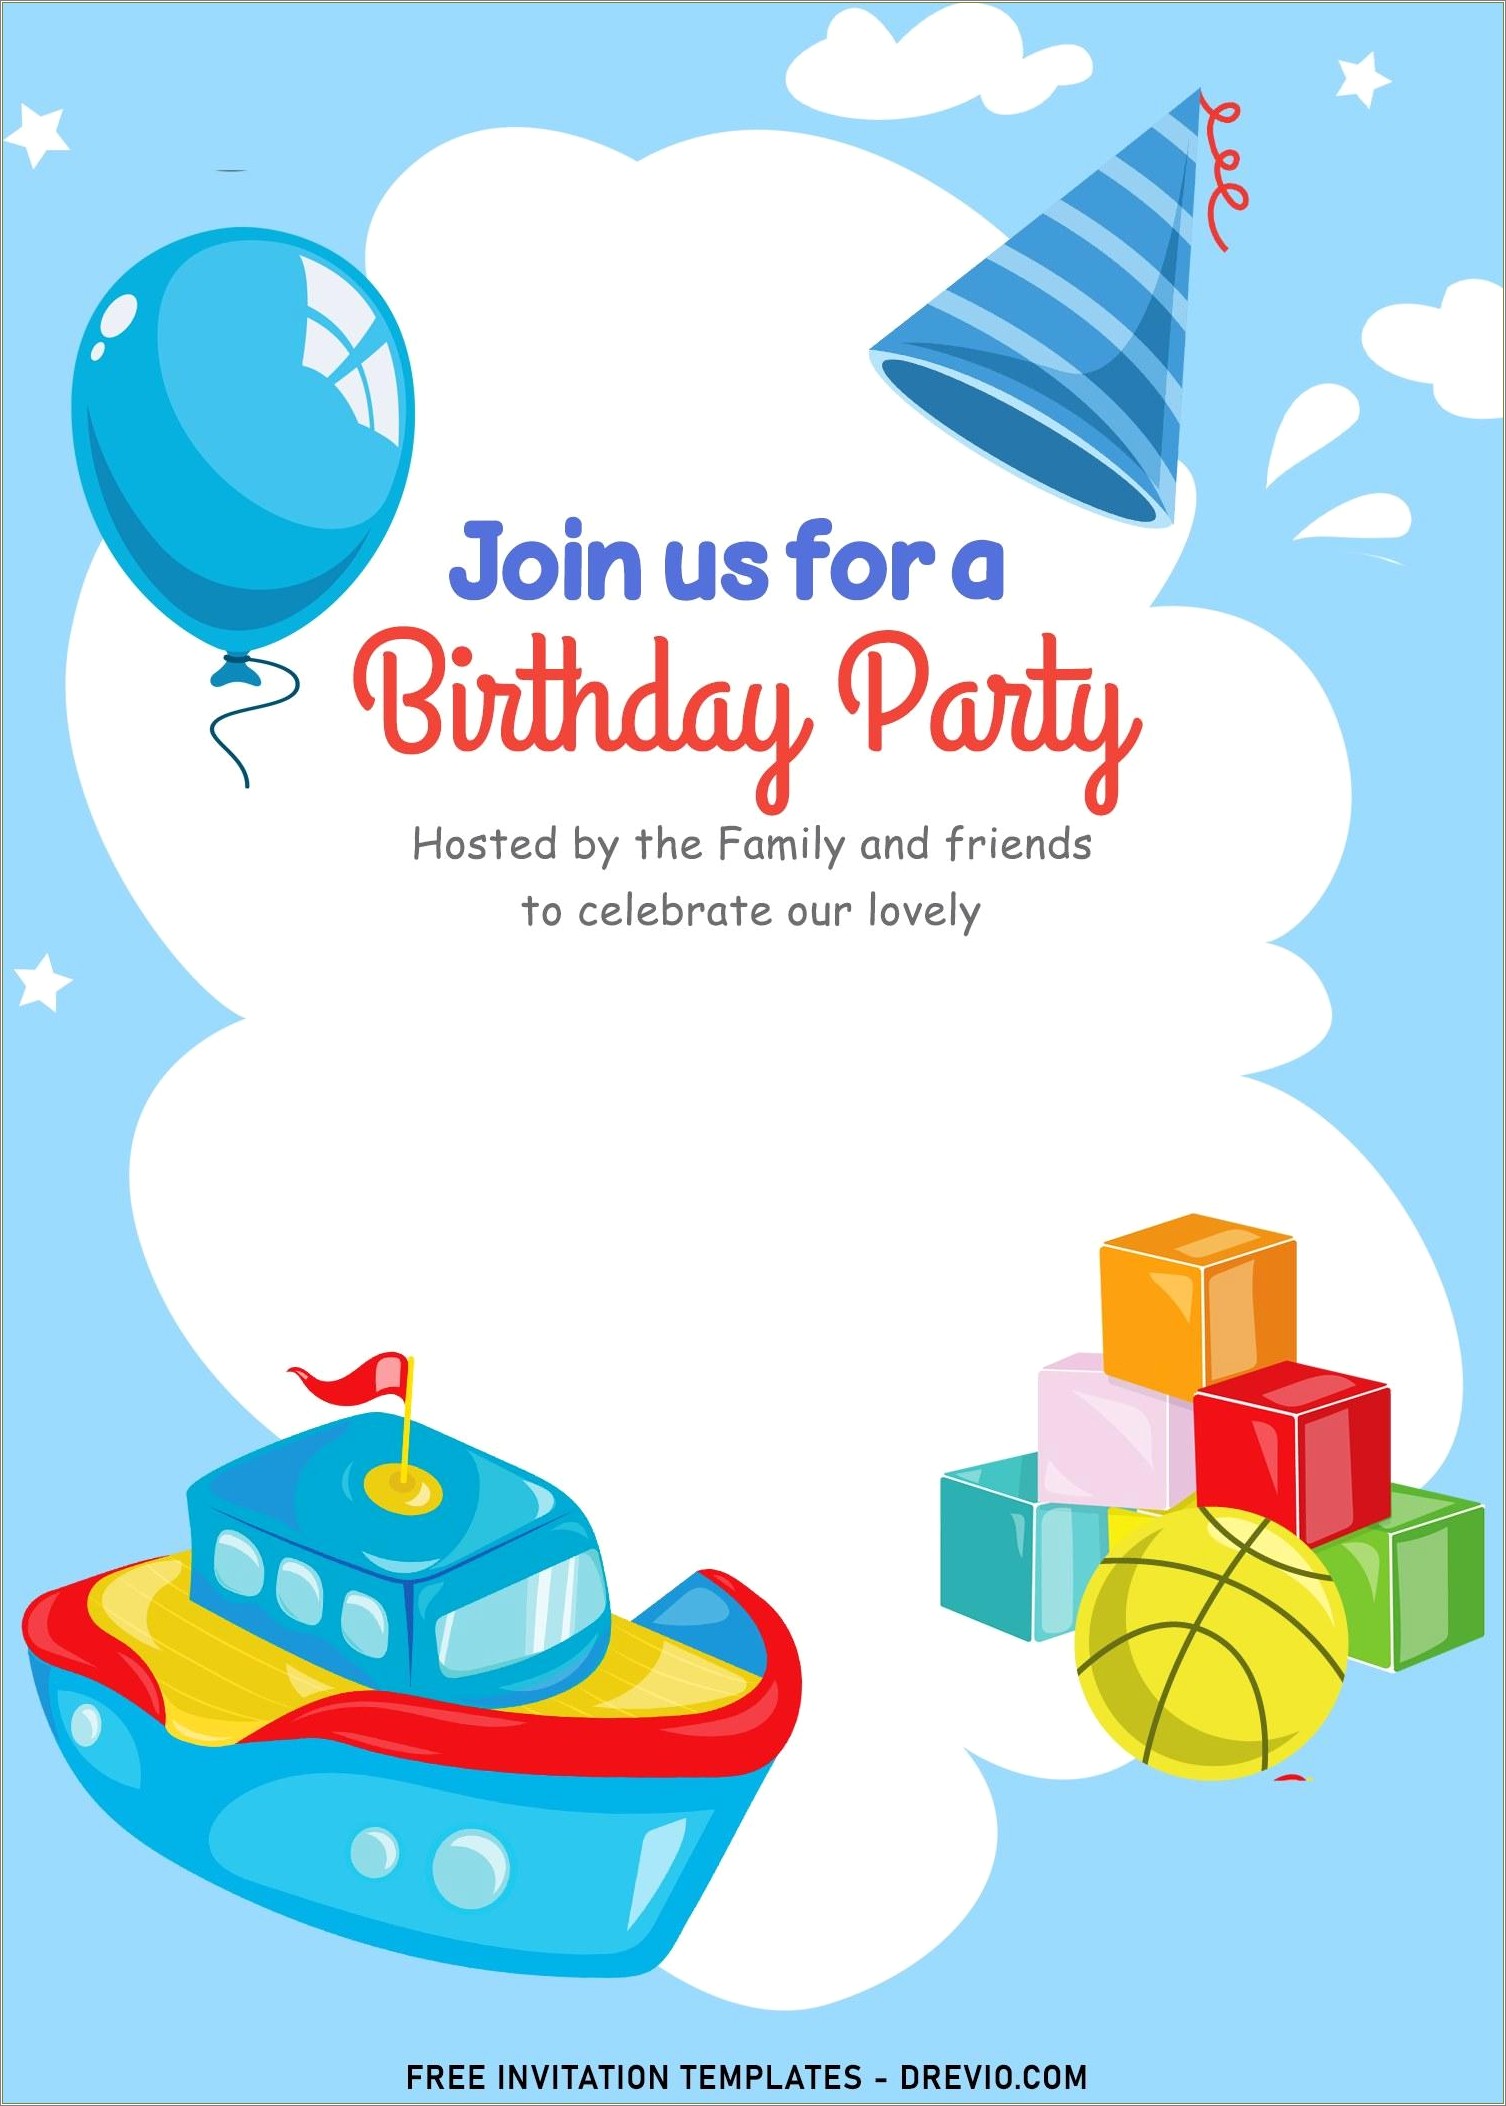 Free Invitation Templates For Children's Birthday